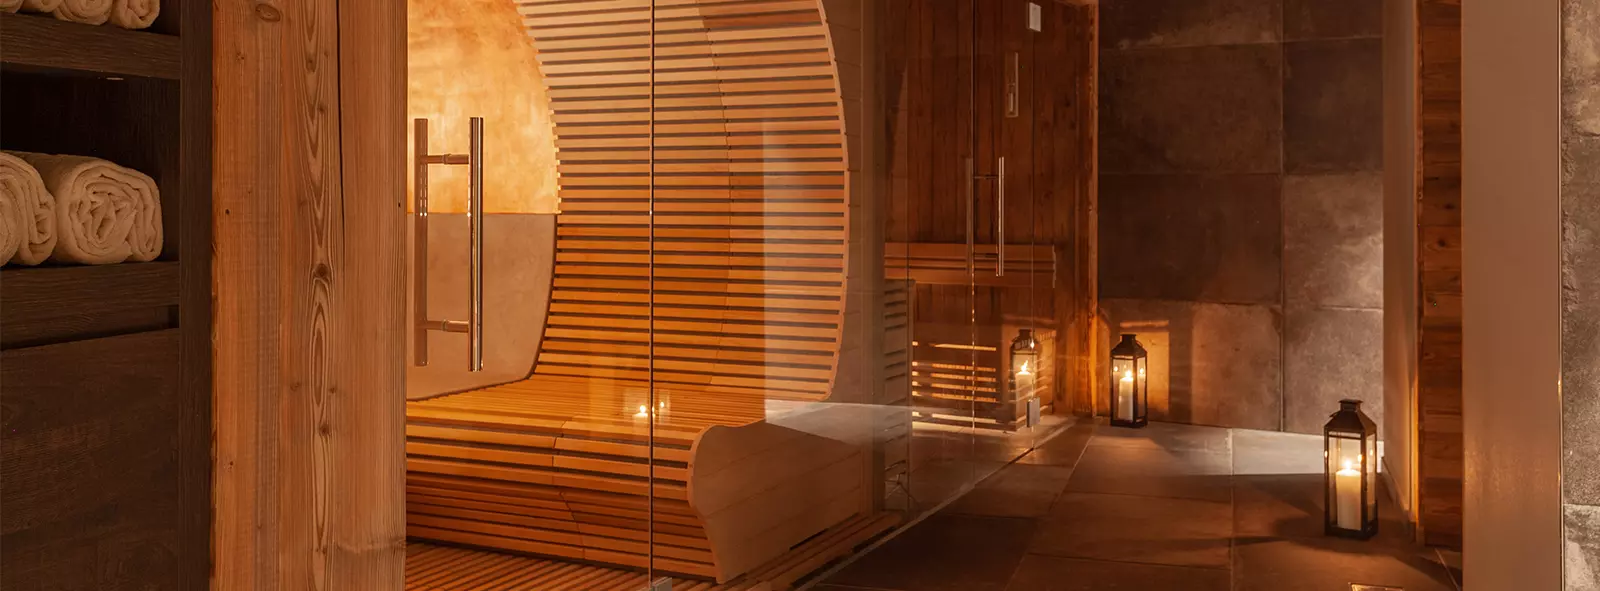 07 hofer group sauna cabina vitarium